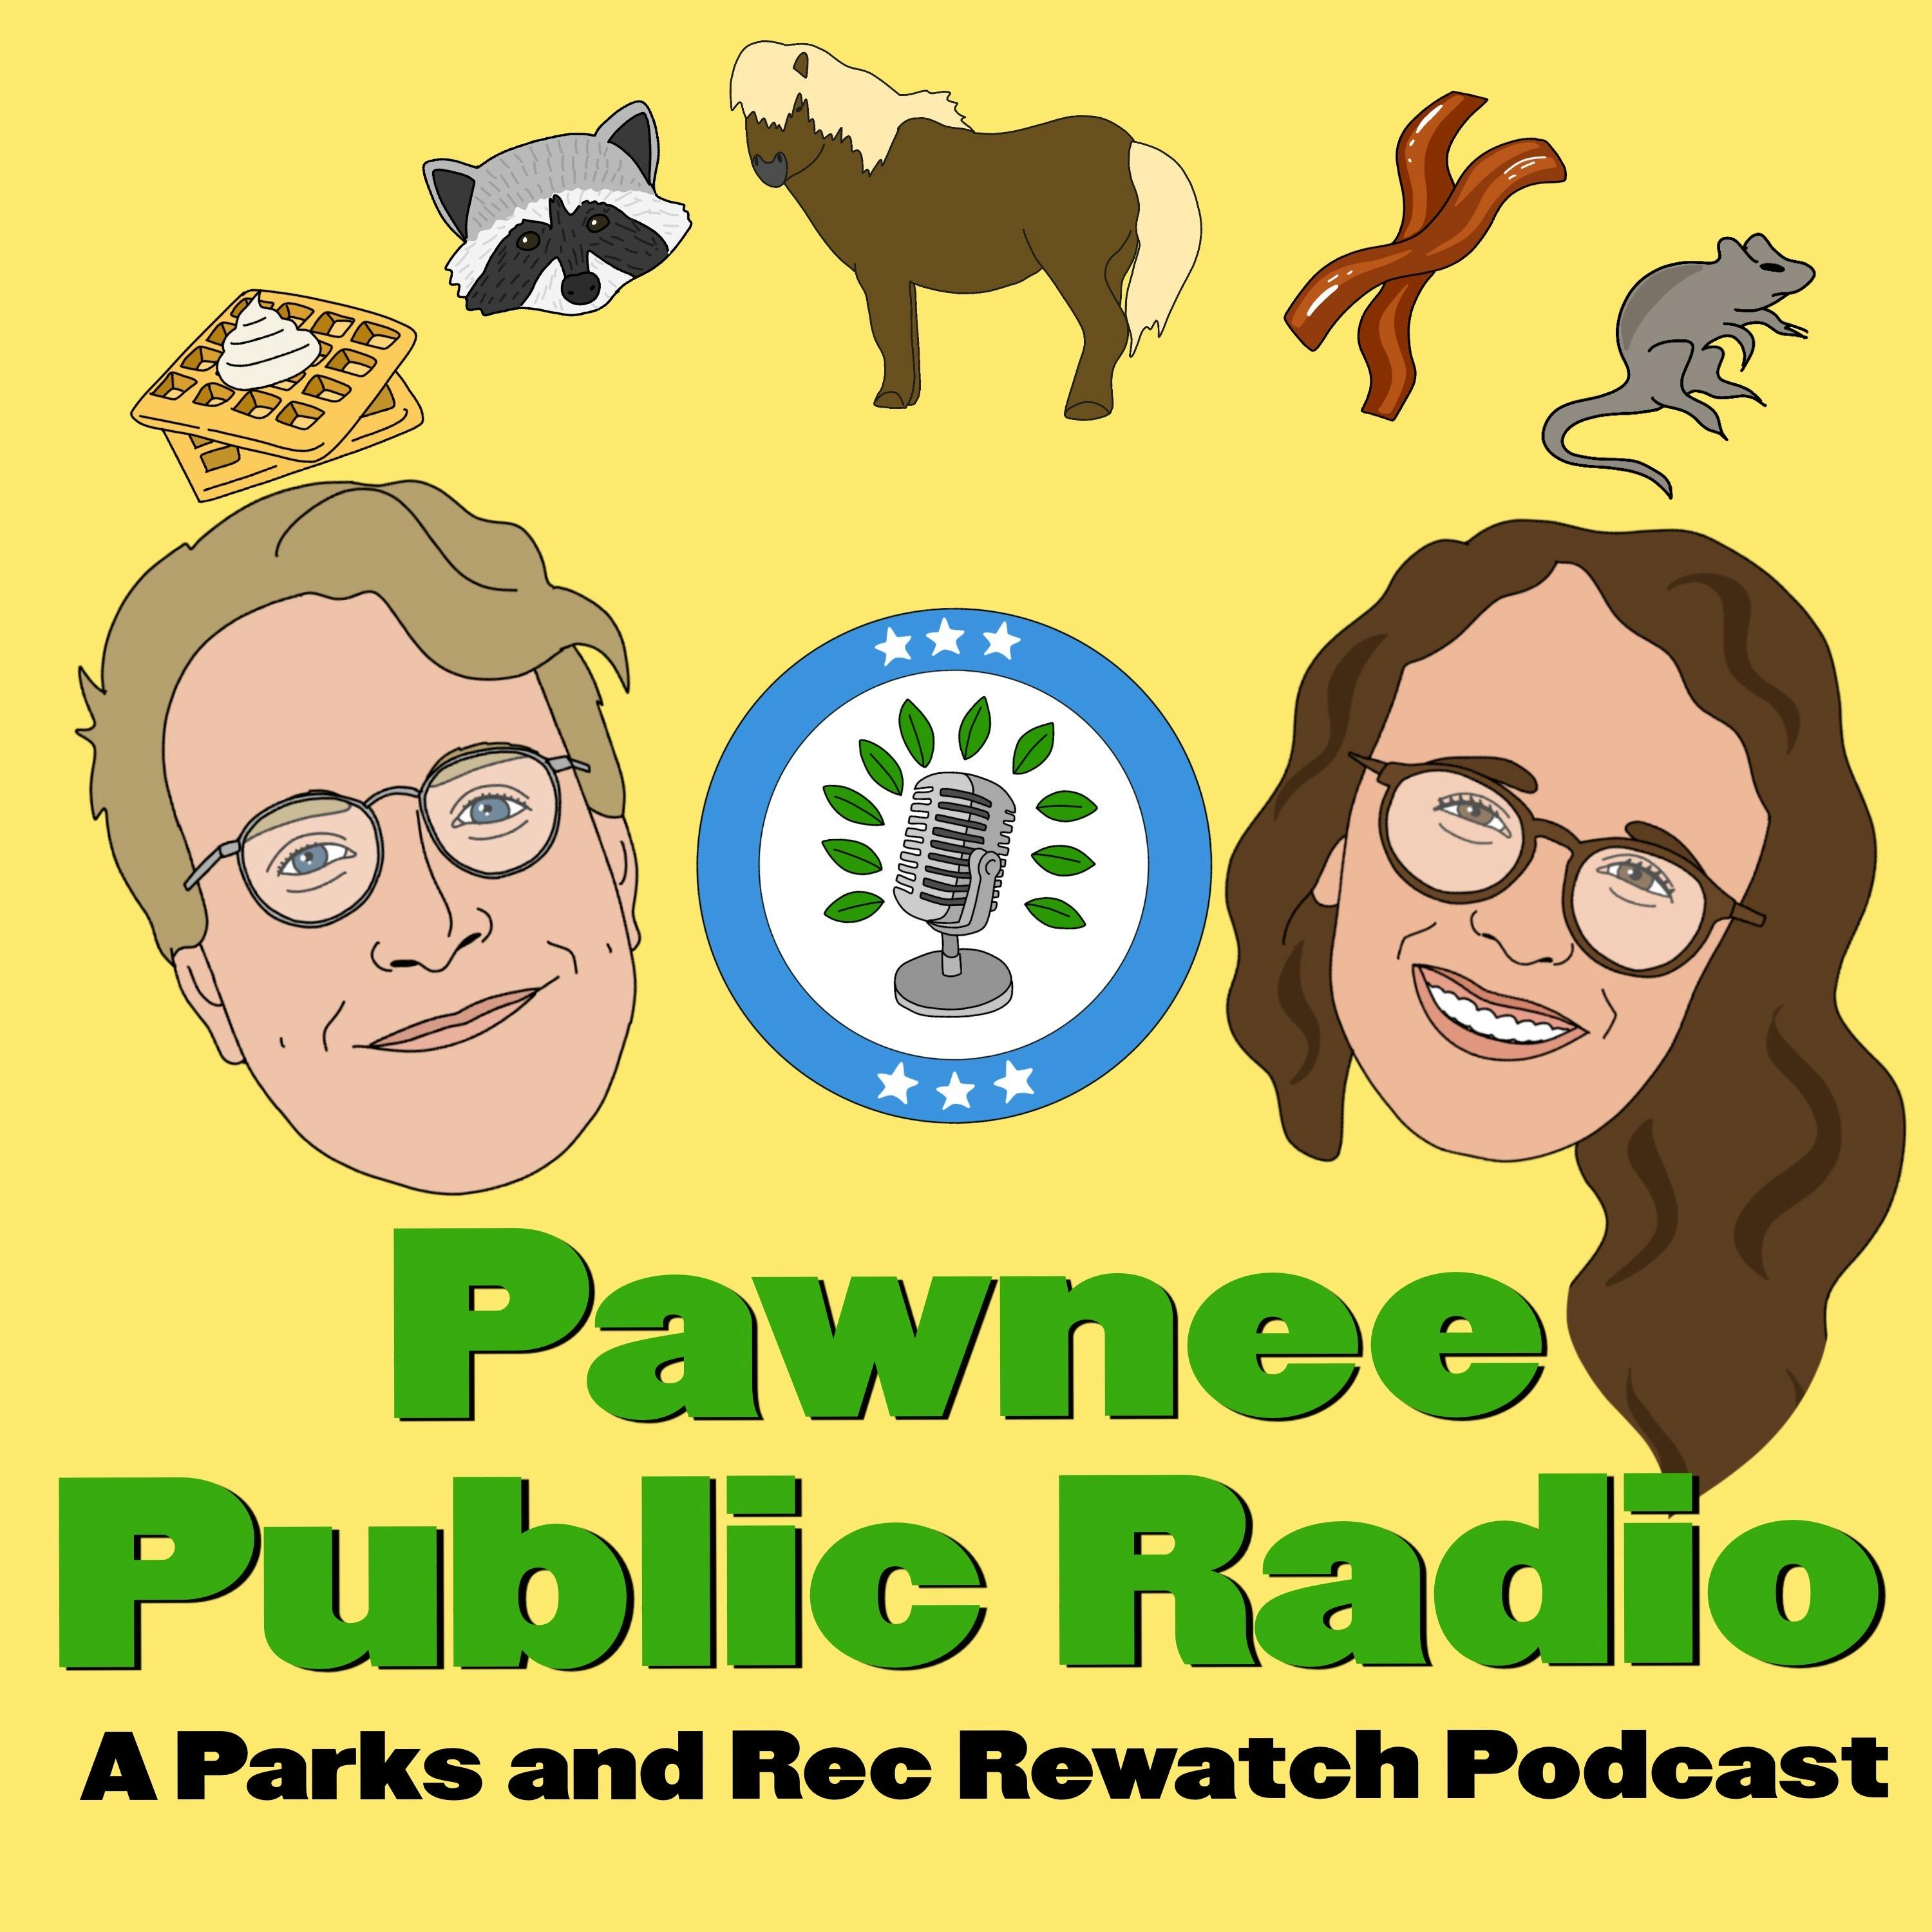 Pawnee Public Radio: A Parks and Rec Rewatch Podcast